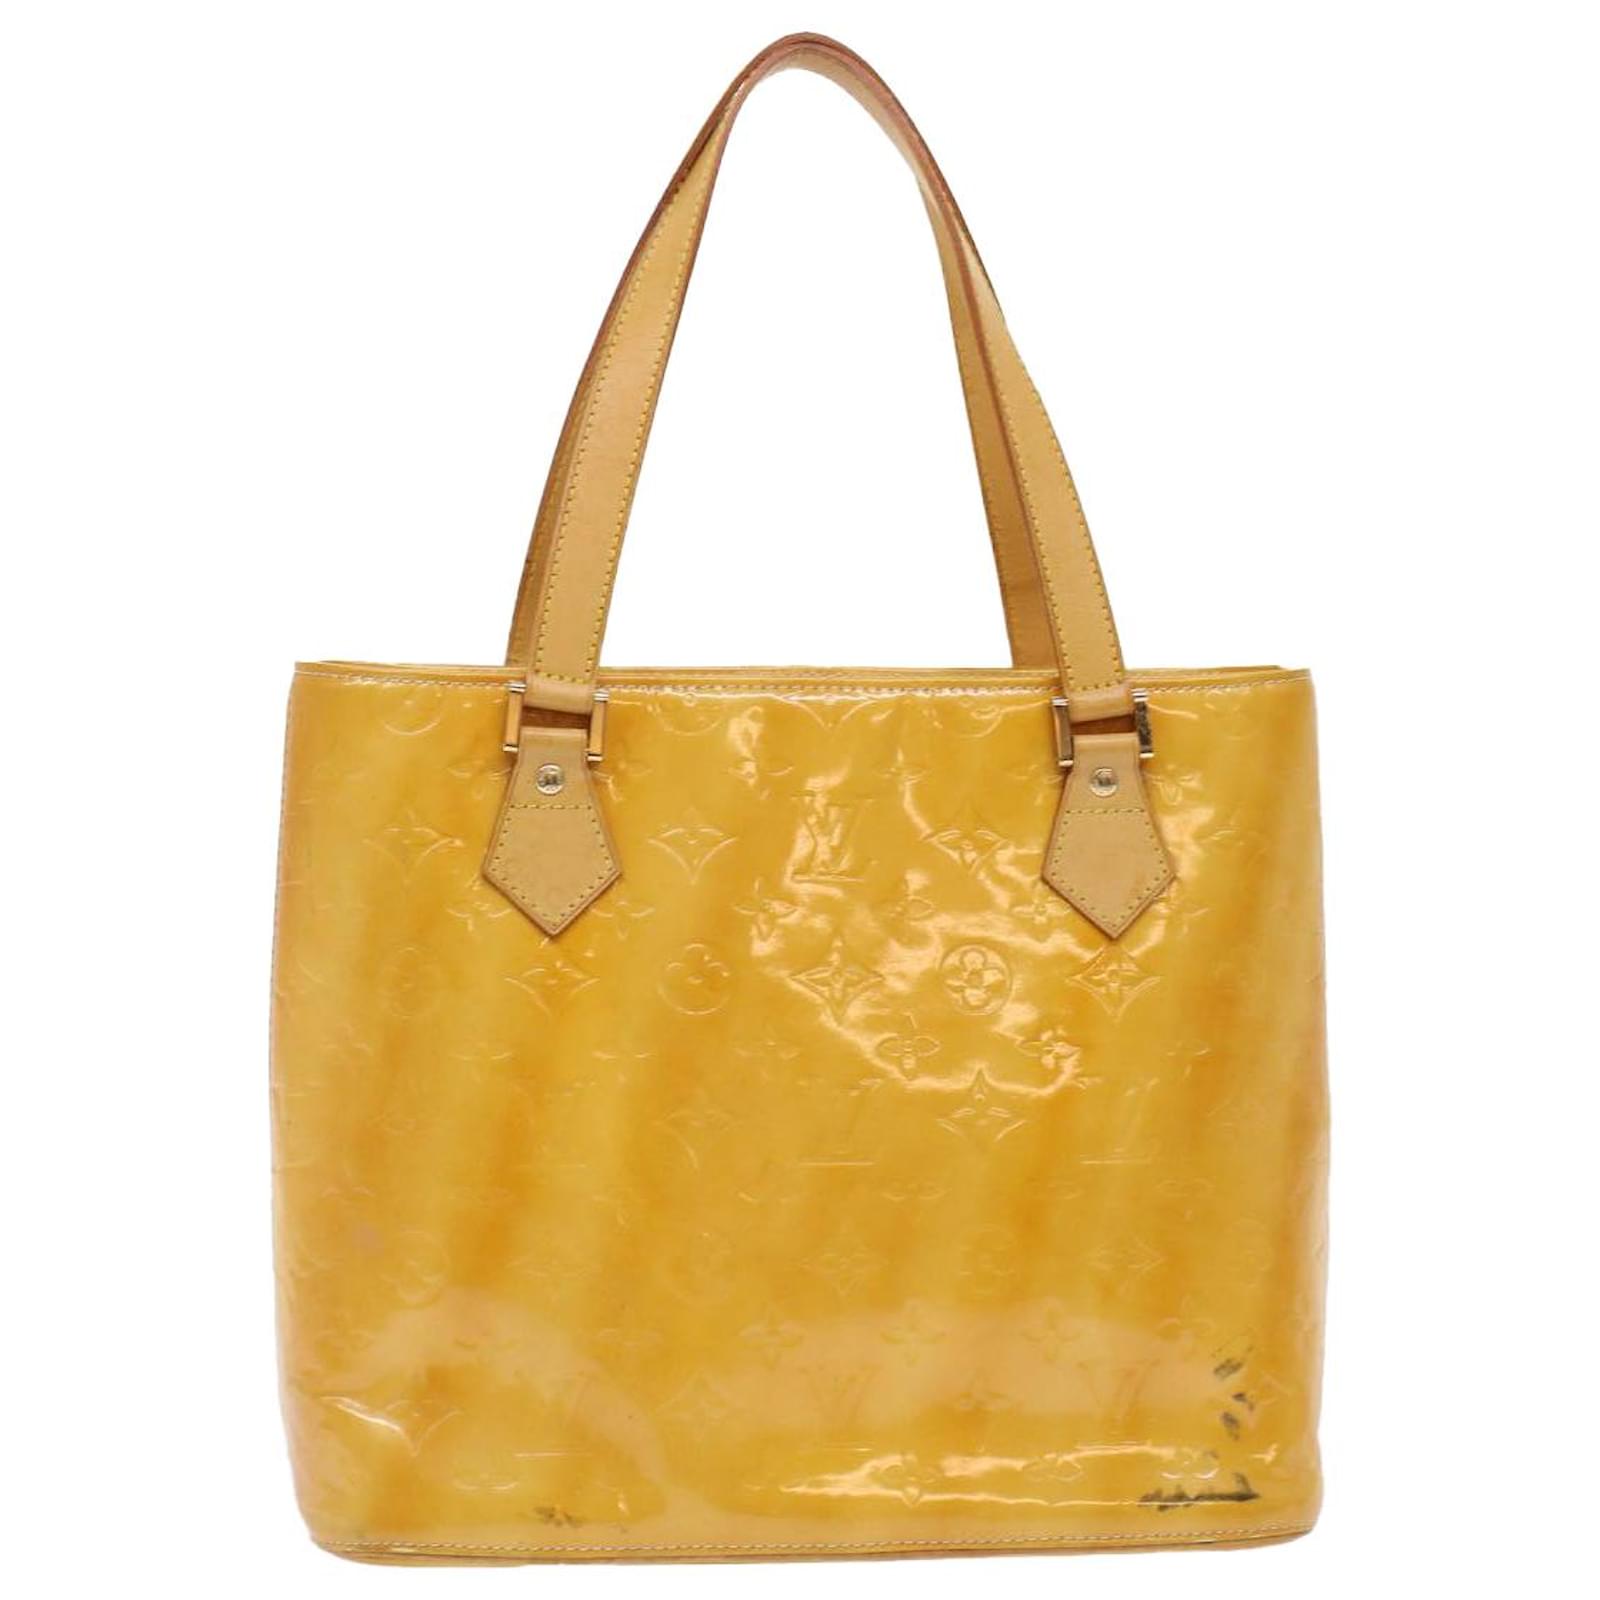 LOUIS VUITTON: Houston Yellow, Patent Leather LV Logo Tote/Shoulder Bag  (of)